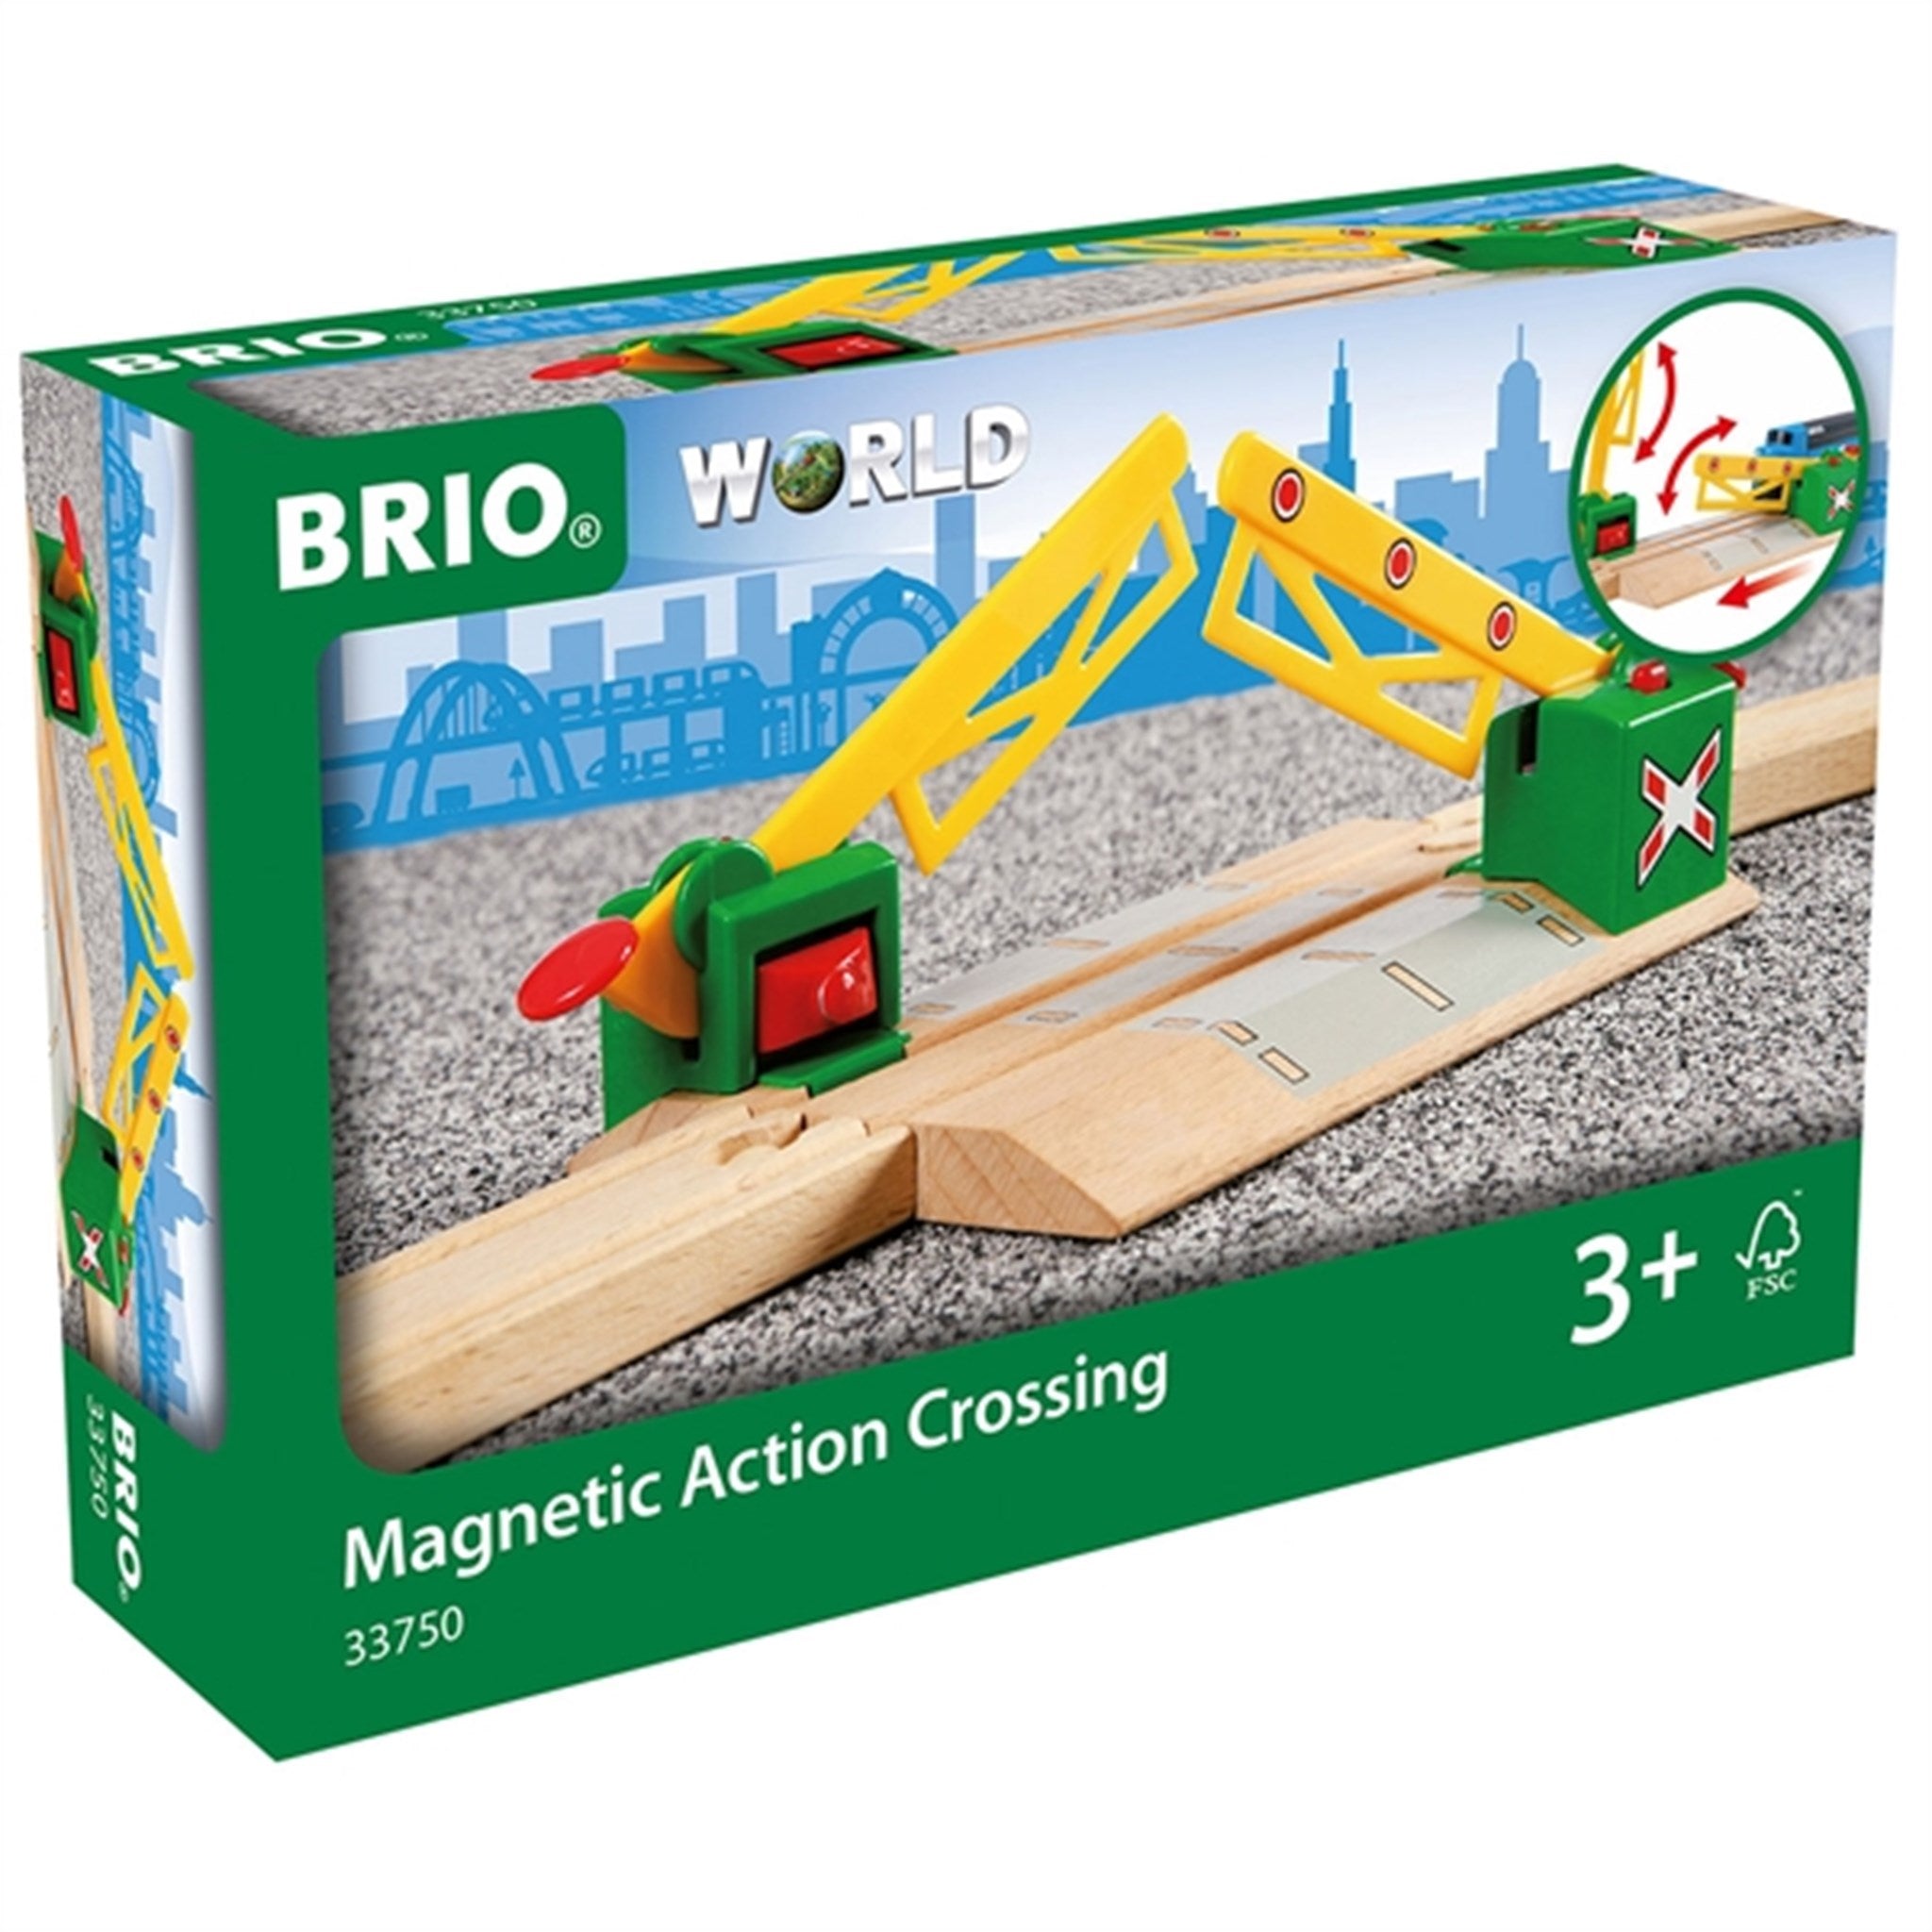 BRIO® Magnetic Action Crossing 2